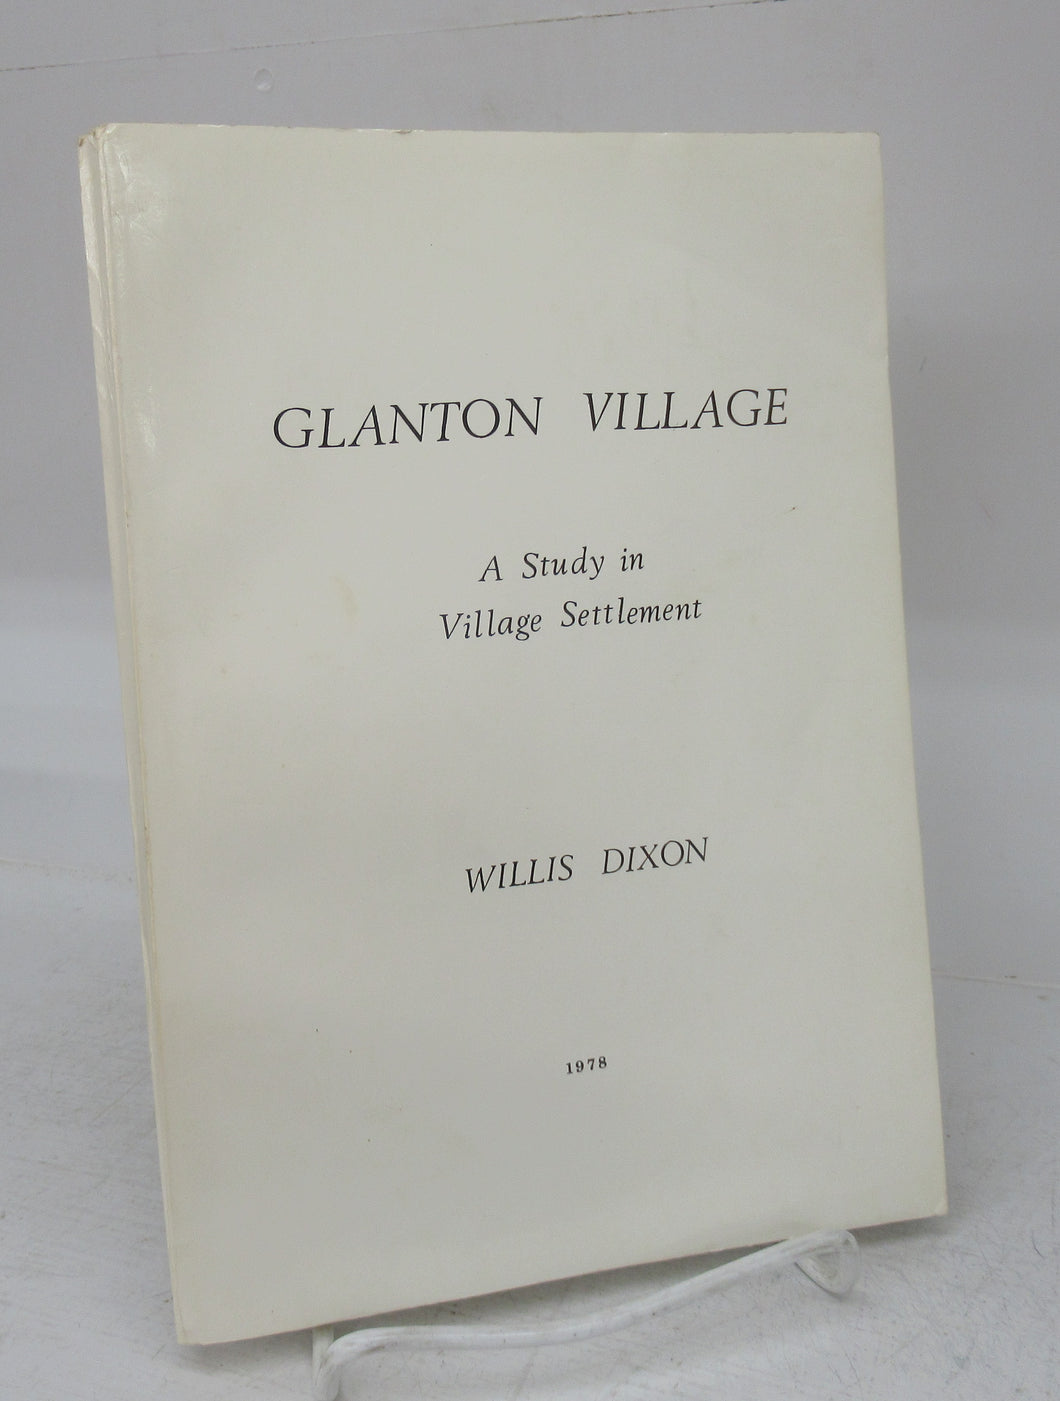 Glanton Village: A Study in Village Settlement